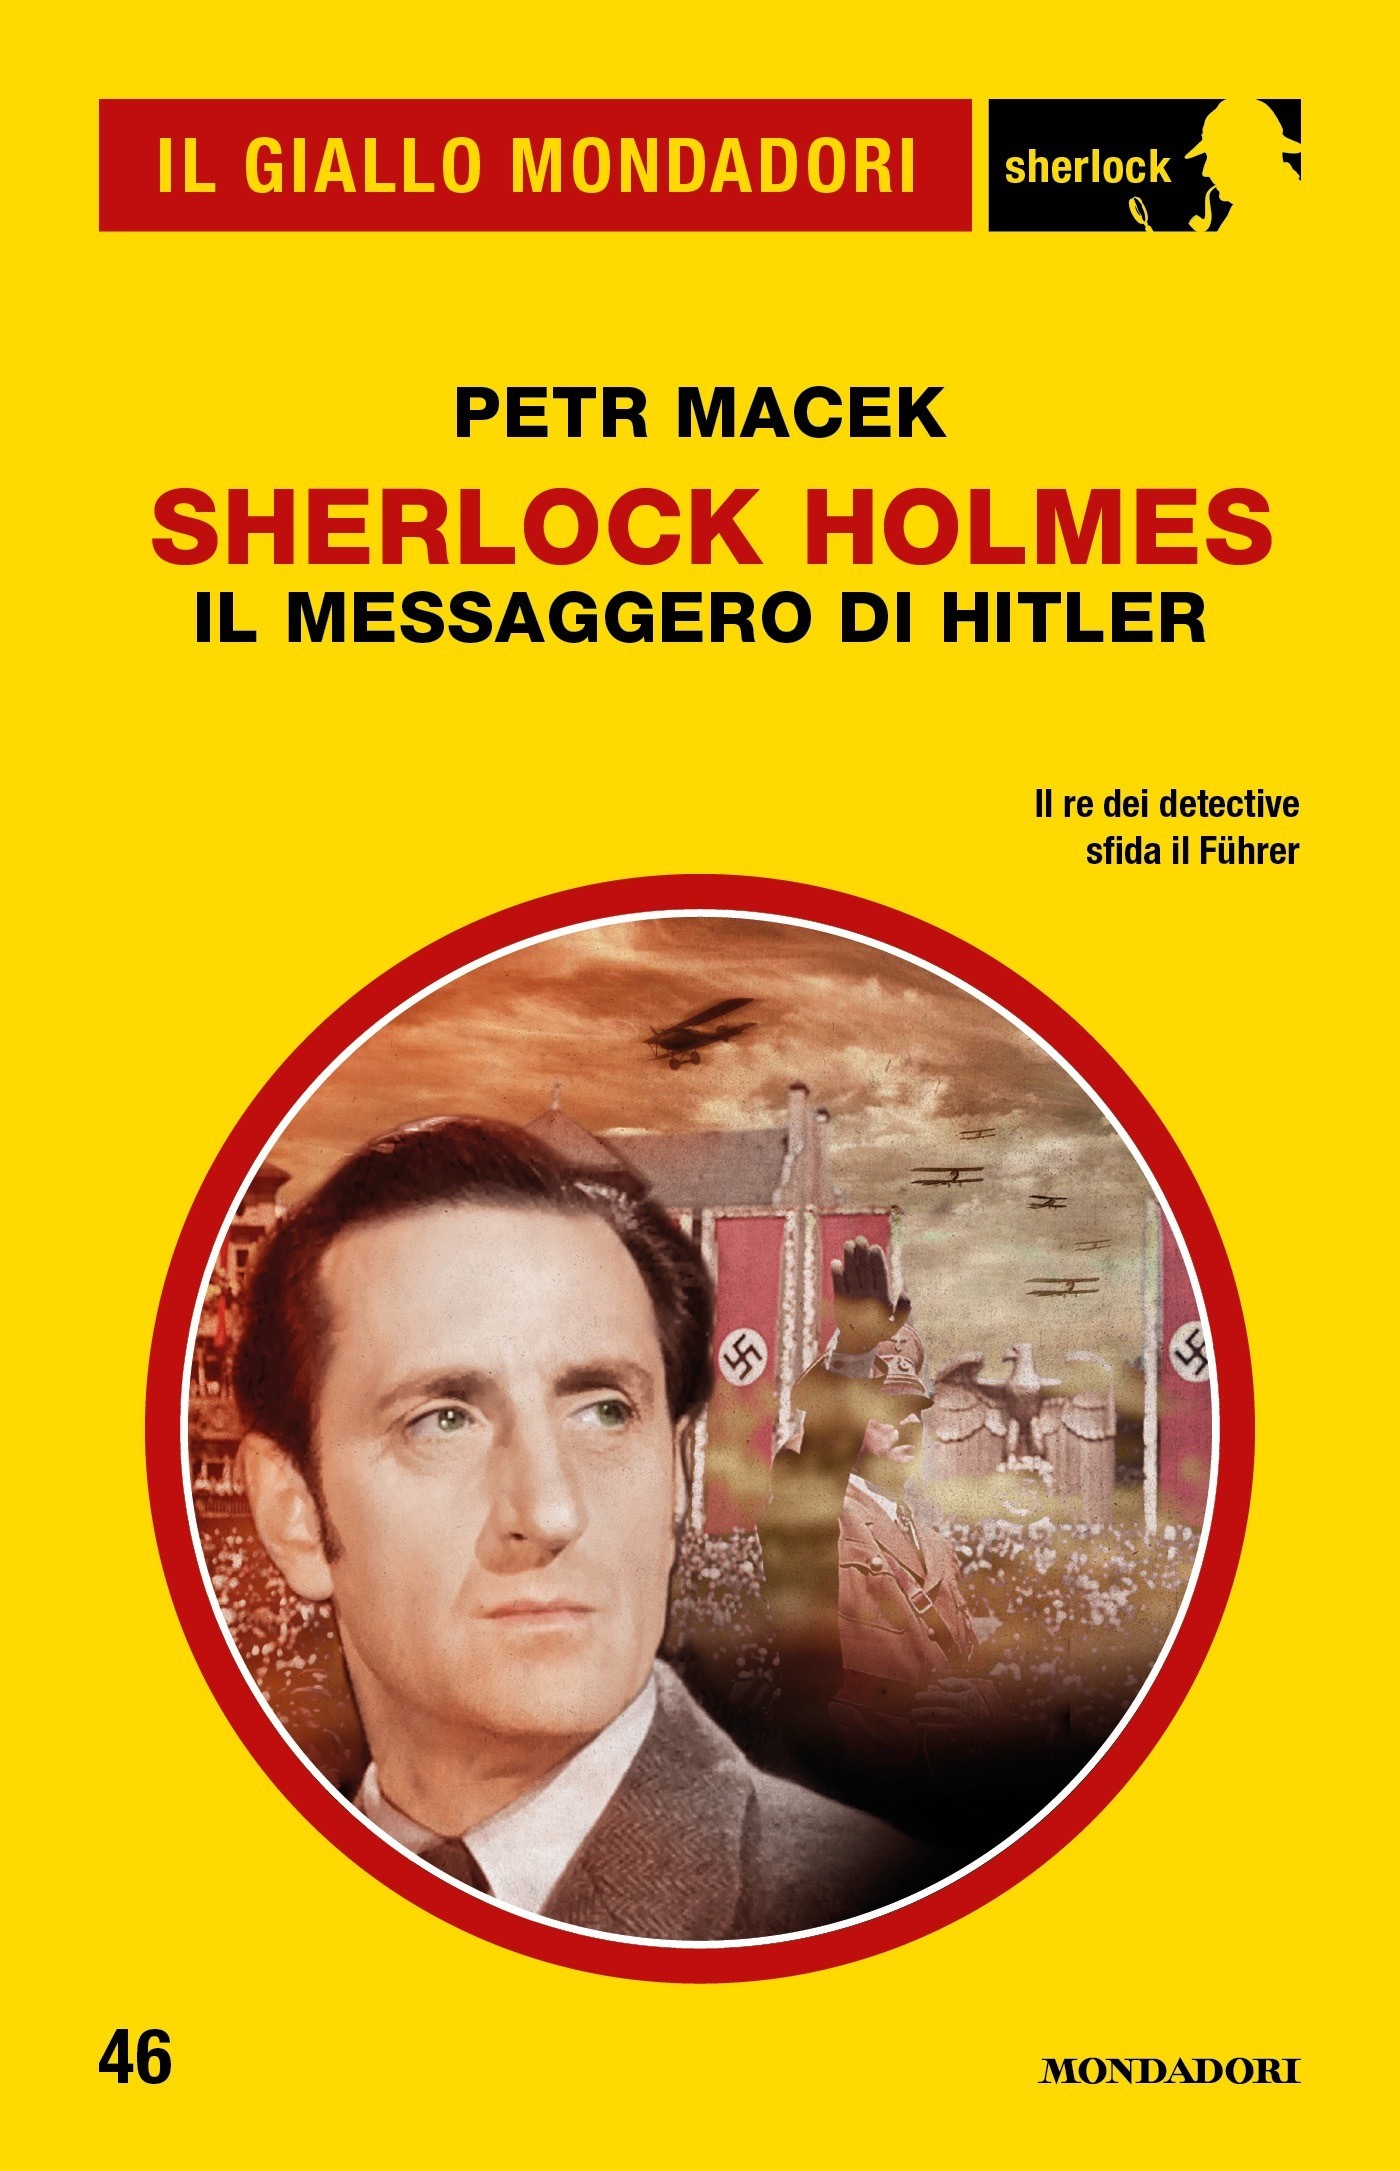 Sherlock Holmes - Il messaggero di Hitler (Il Giallo Mondadori Sherlock) - Librerie.coop